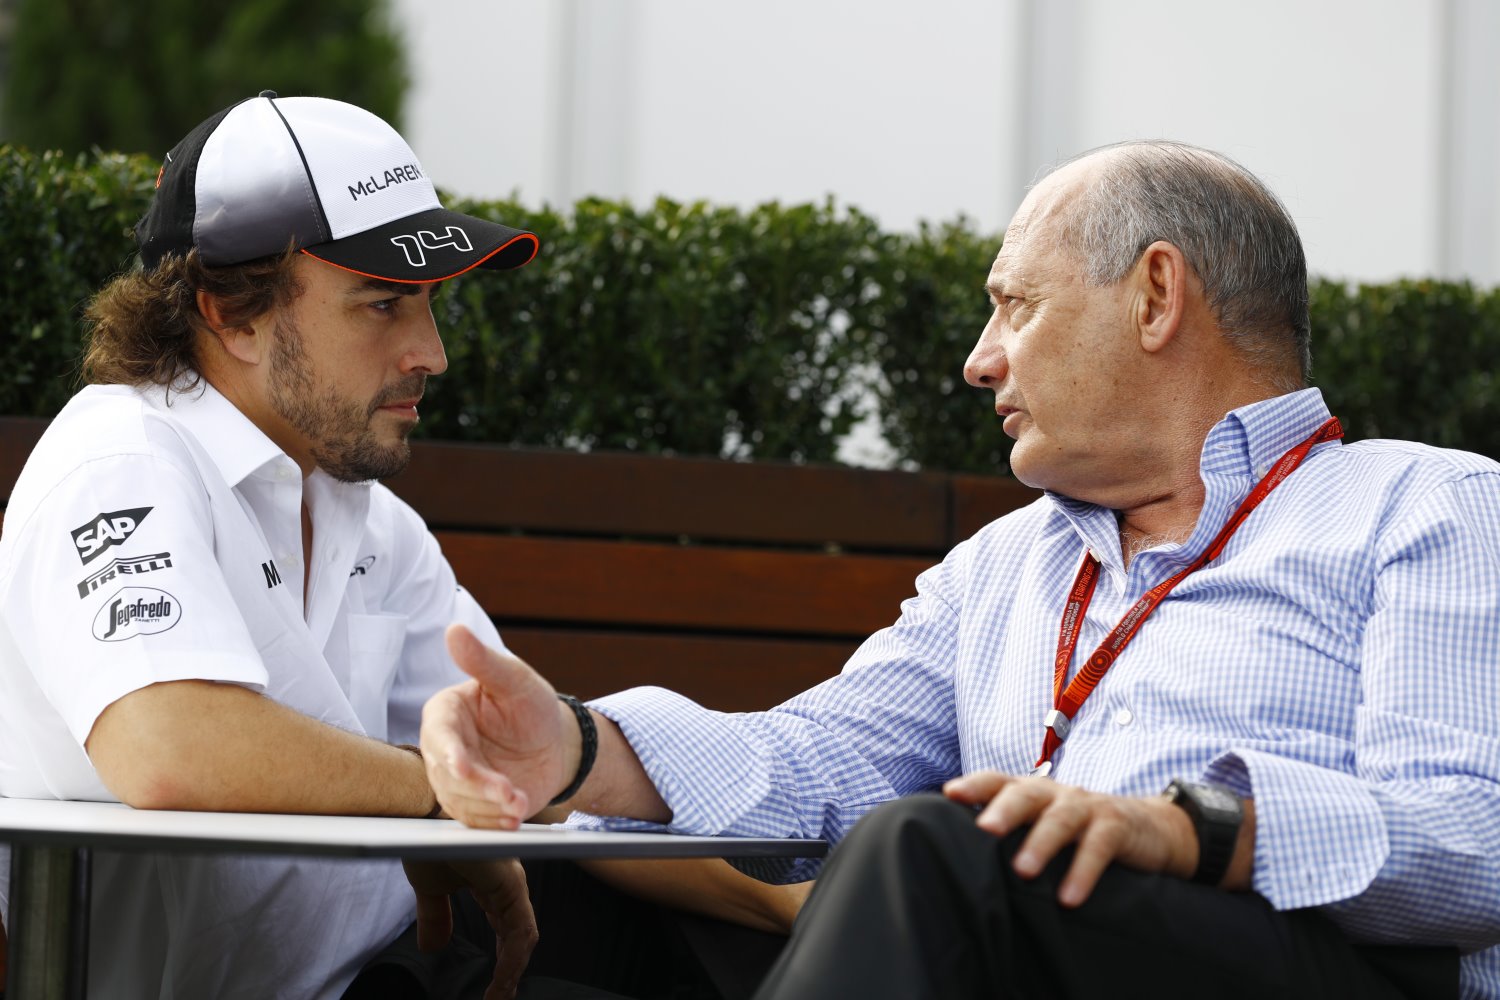 Fernando Alonso tells Dennis he wants a title next year